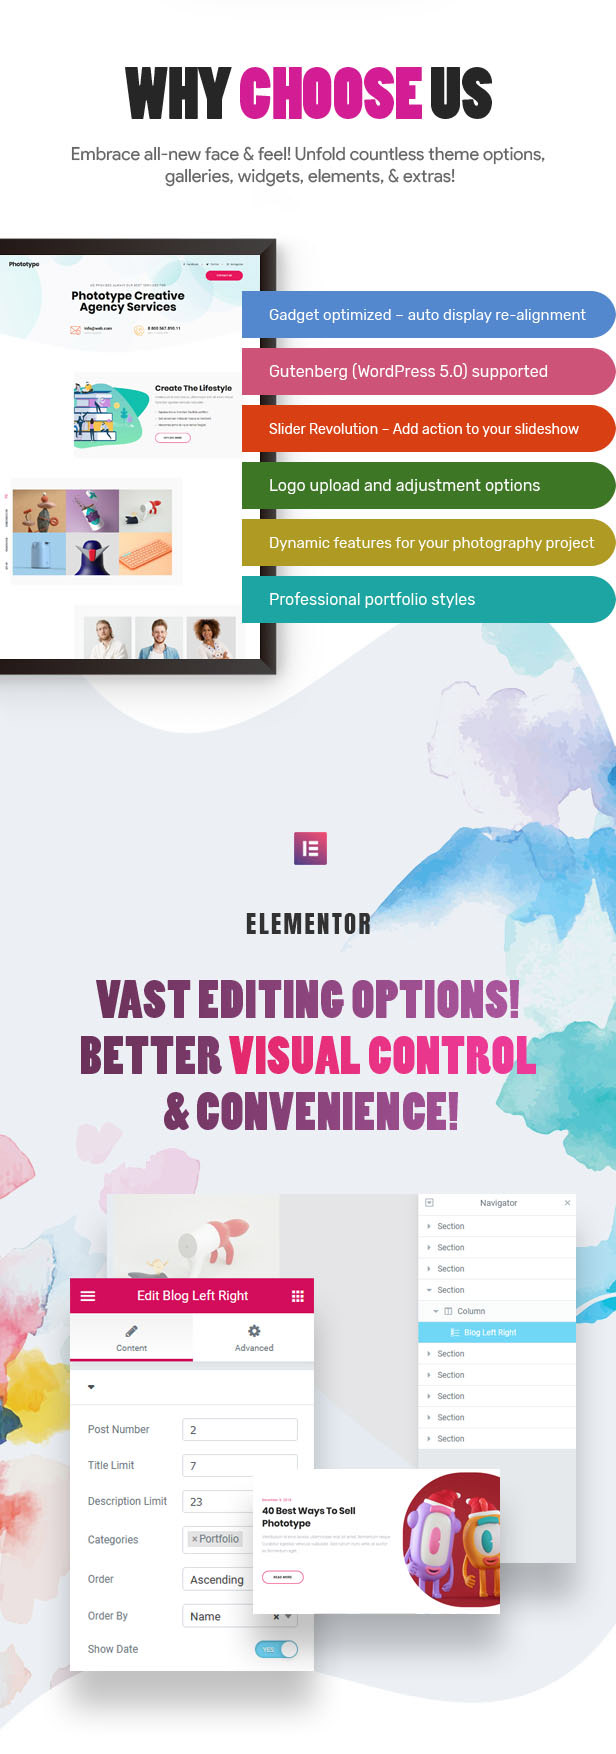 Phototype - New Elementor Portoflio WordPress Theme 2019 for Agency, Photography Sites - 2